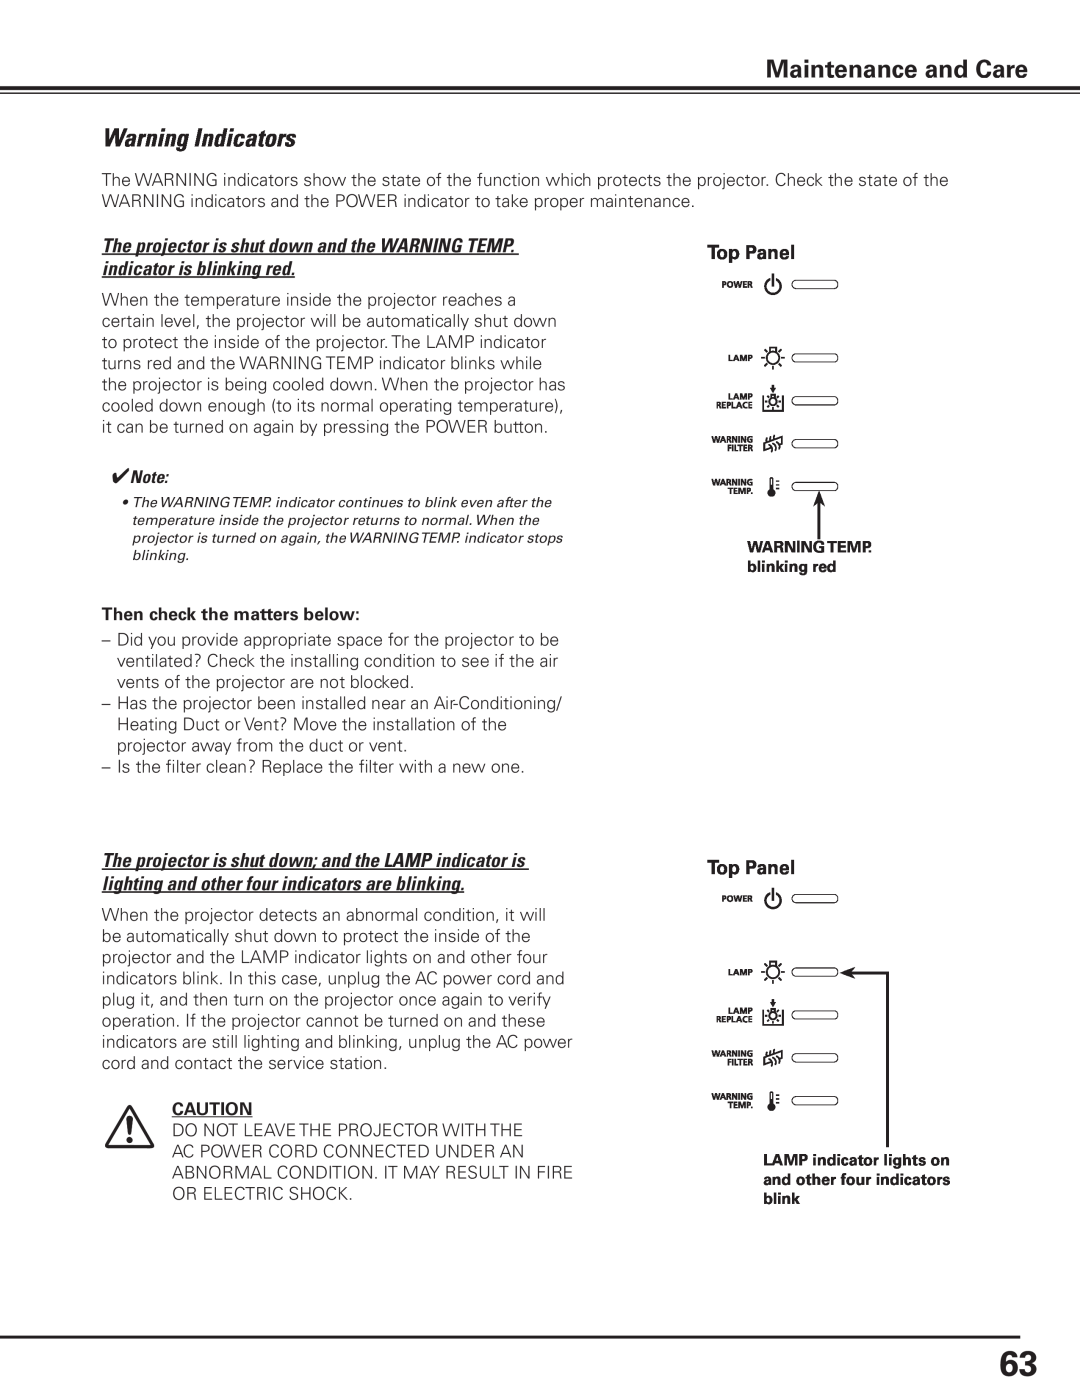 Canon 7585 manual Warning Indicators, Maintenance and Care, Top Panel, Note 